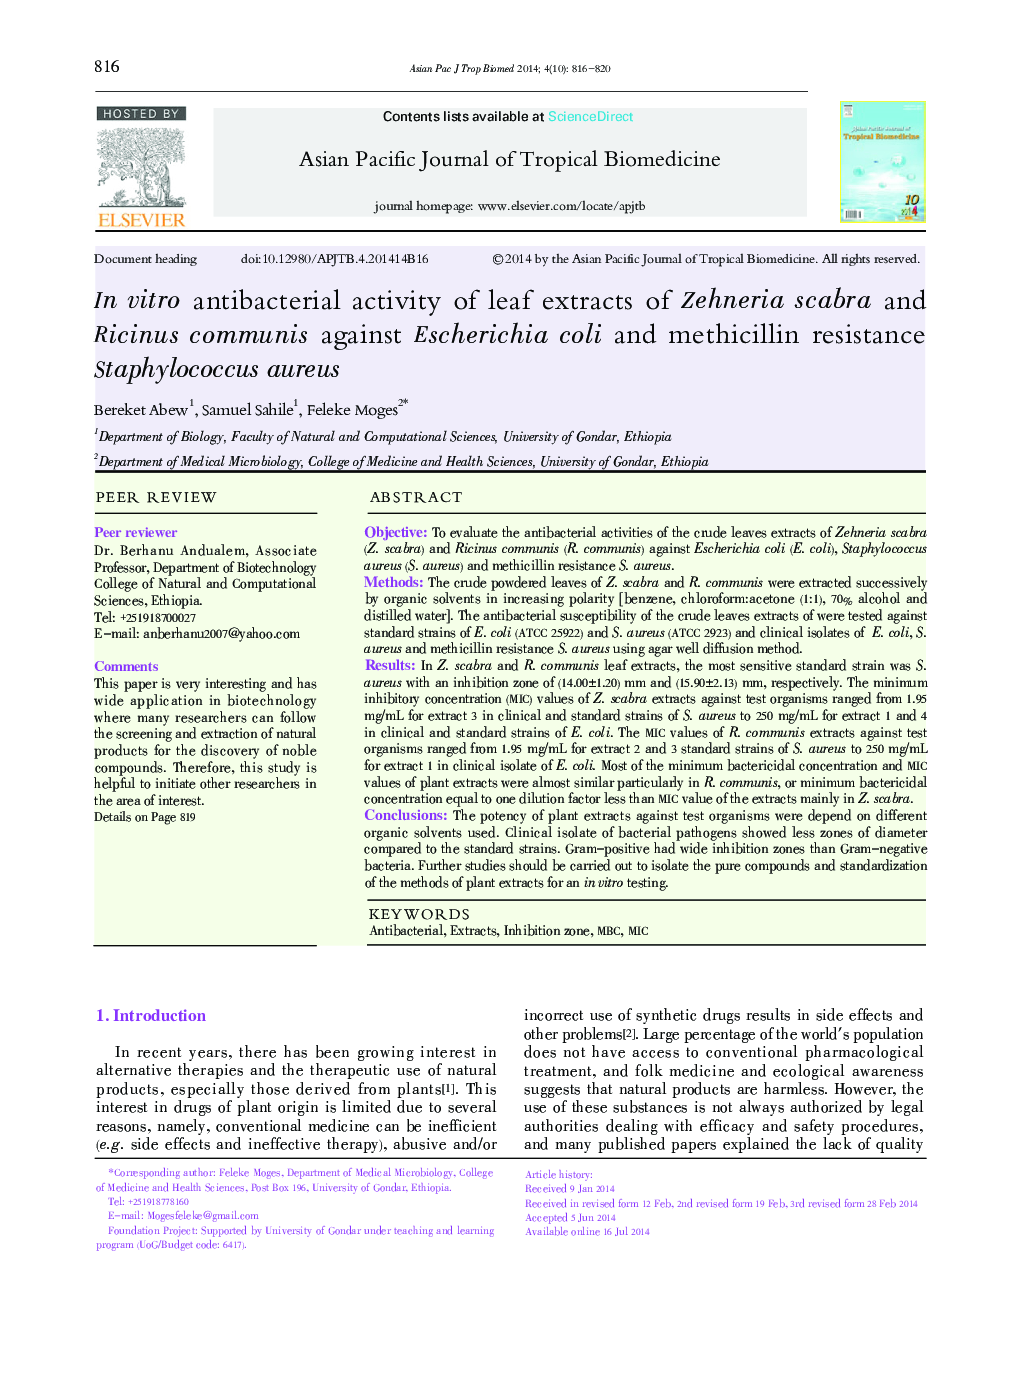 In vitro antibacterial activity of leaf extracts of Zehneria scabra and Ricinus communis against Escherichia coli and methicillin resistance Staphylococcus aureus